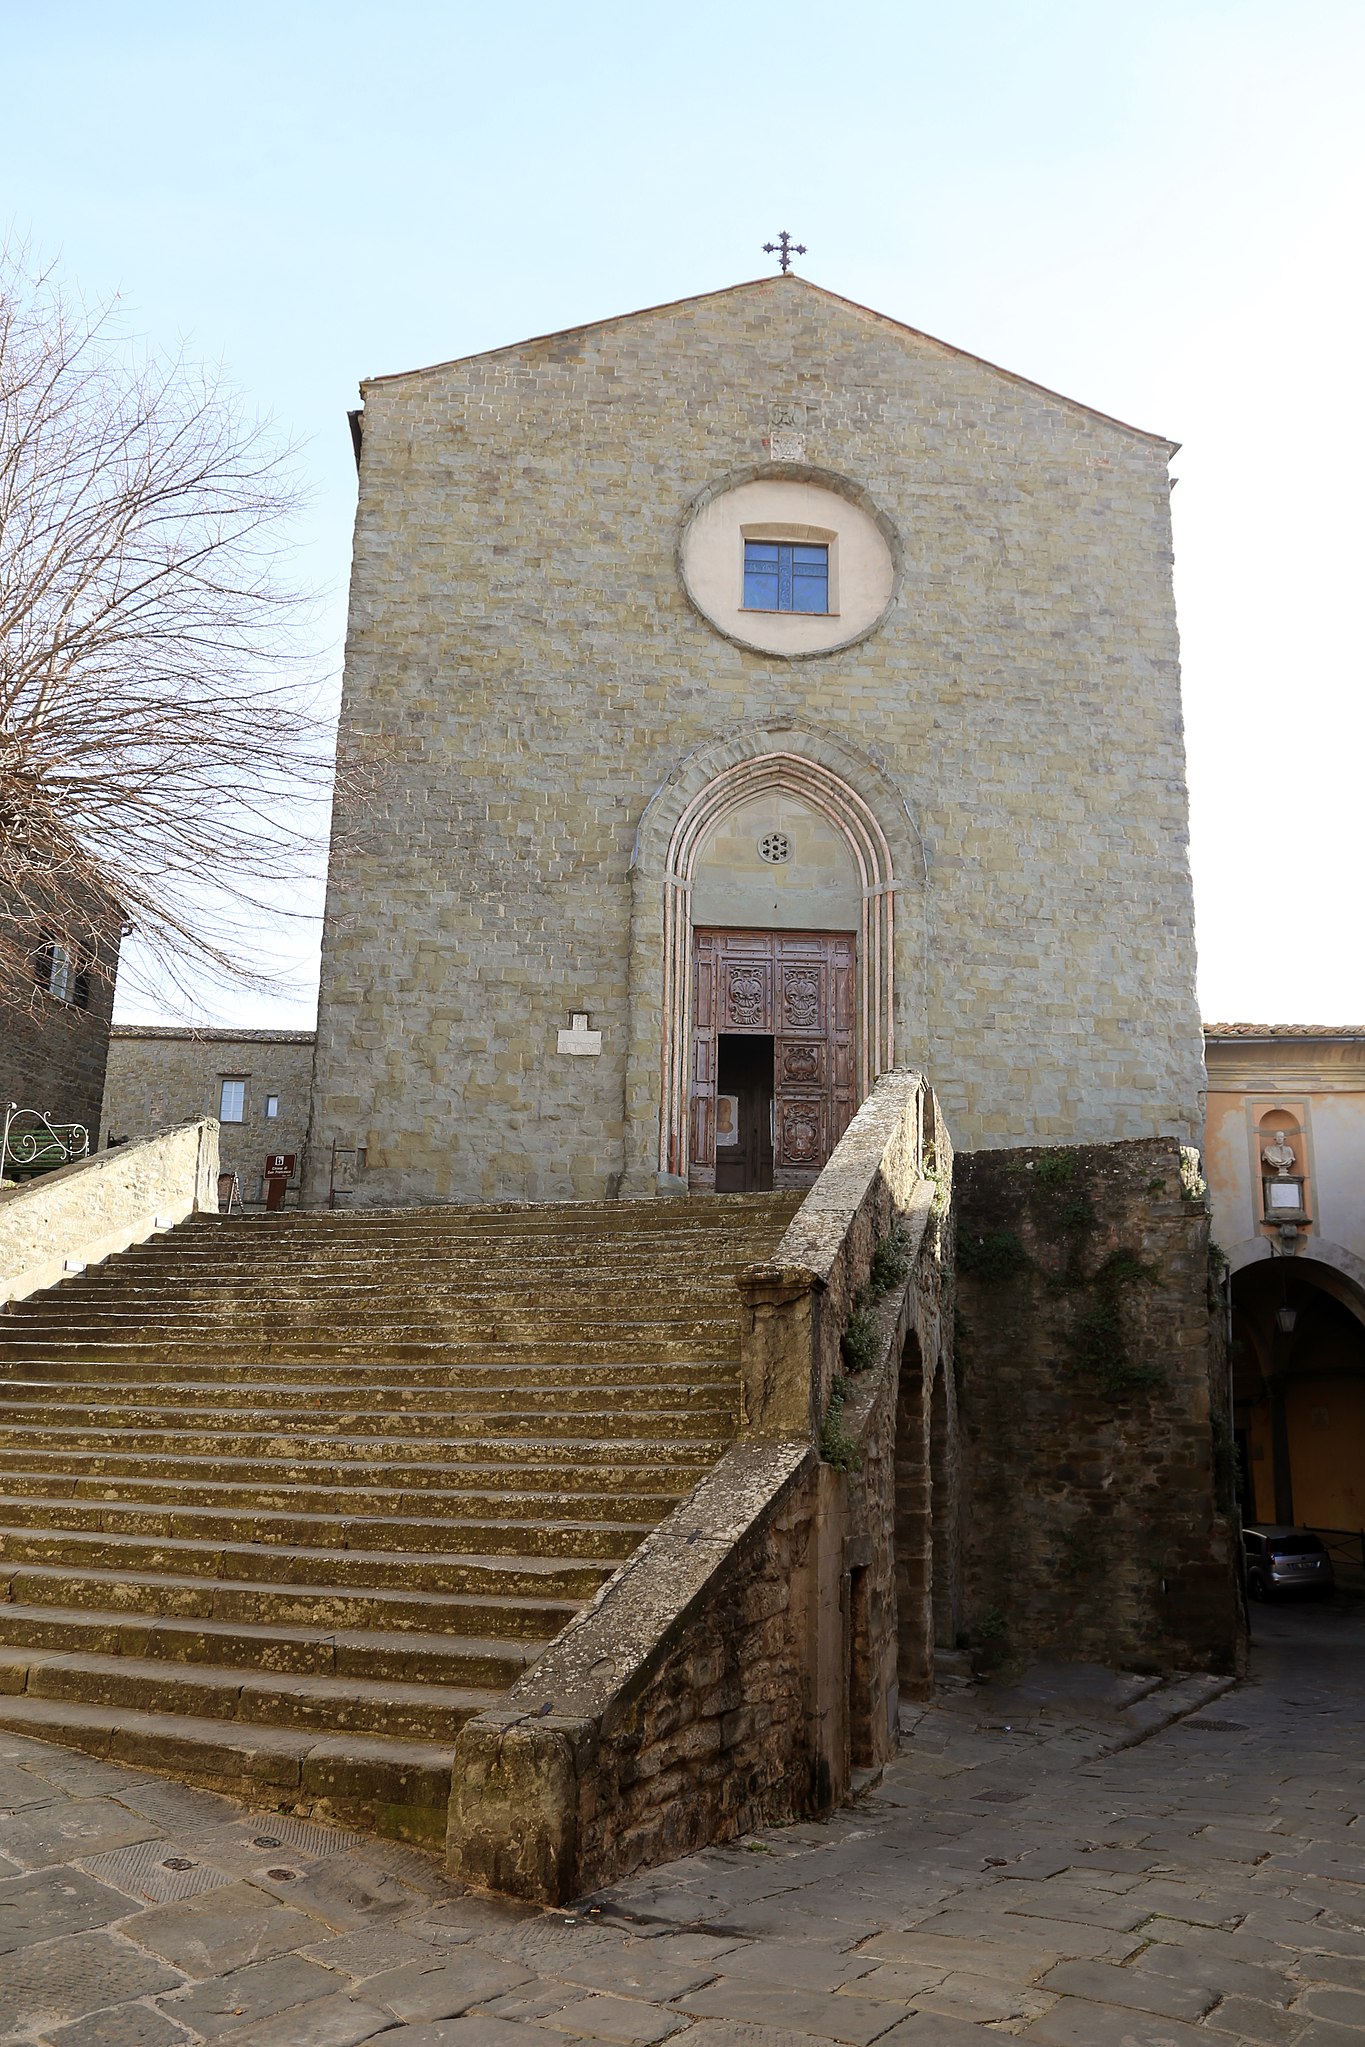 The church of San Francesco in Cortona